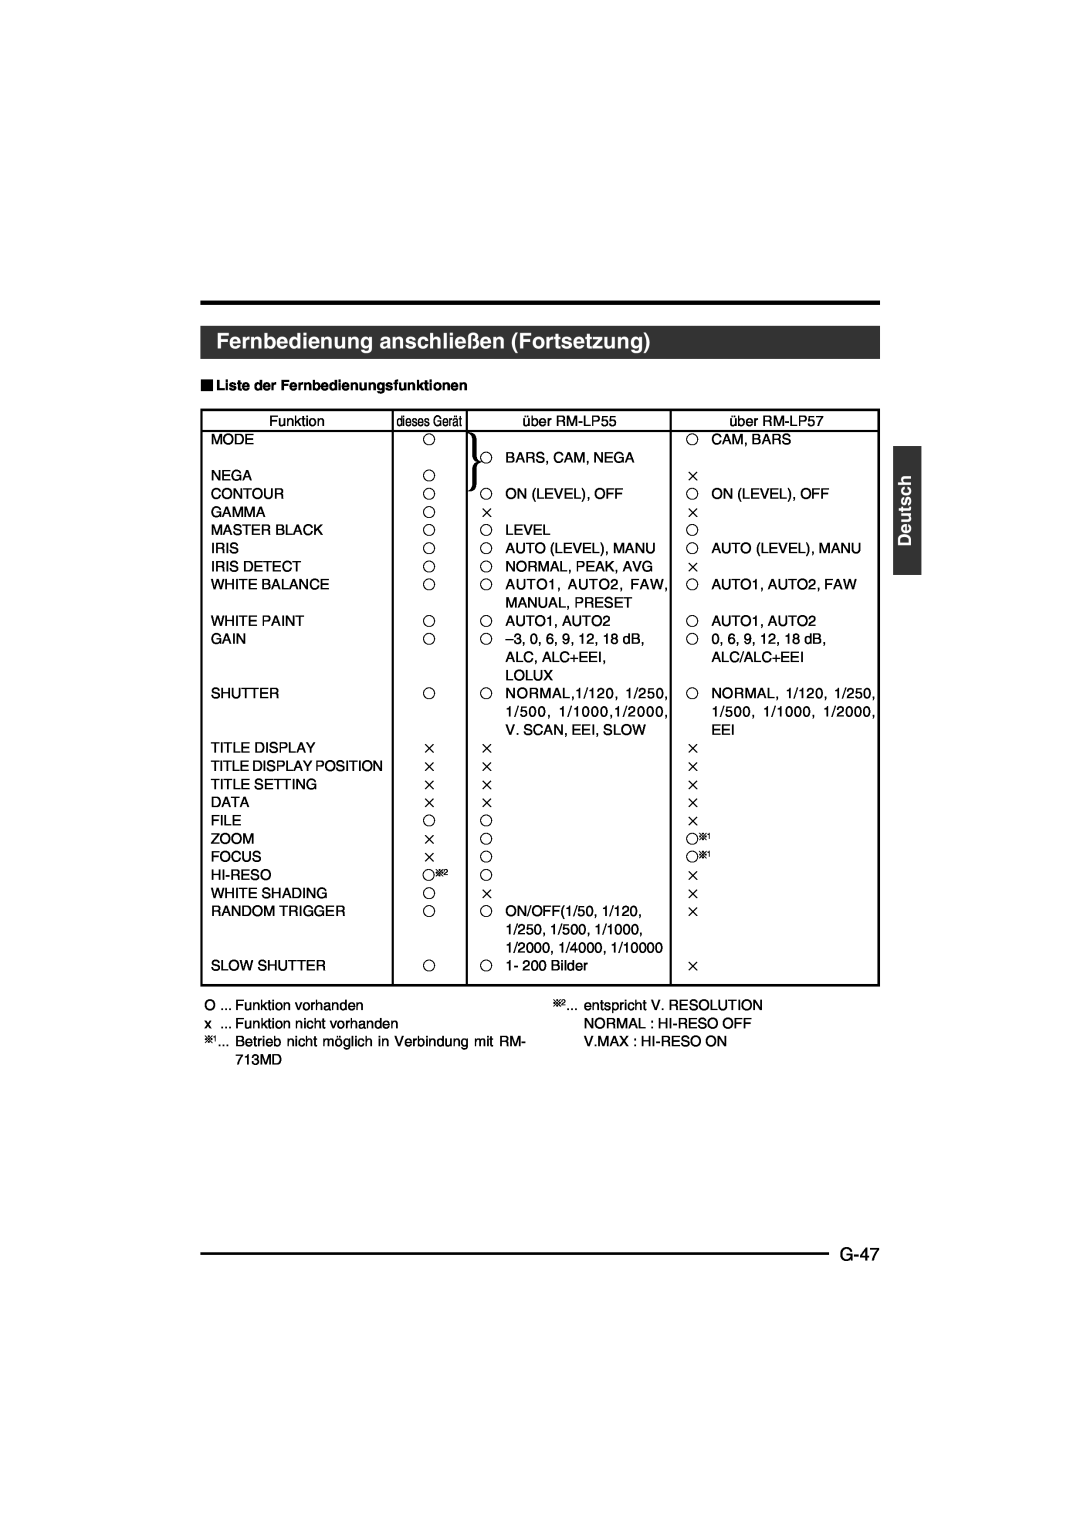 JVC KY-F550E instruction manual Fernbedienung anschließen Fortsetzung, G-47, Deutsch,  Liste der Fernbedienungsfunktionen 